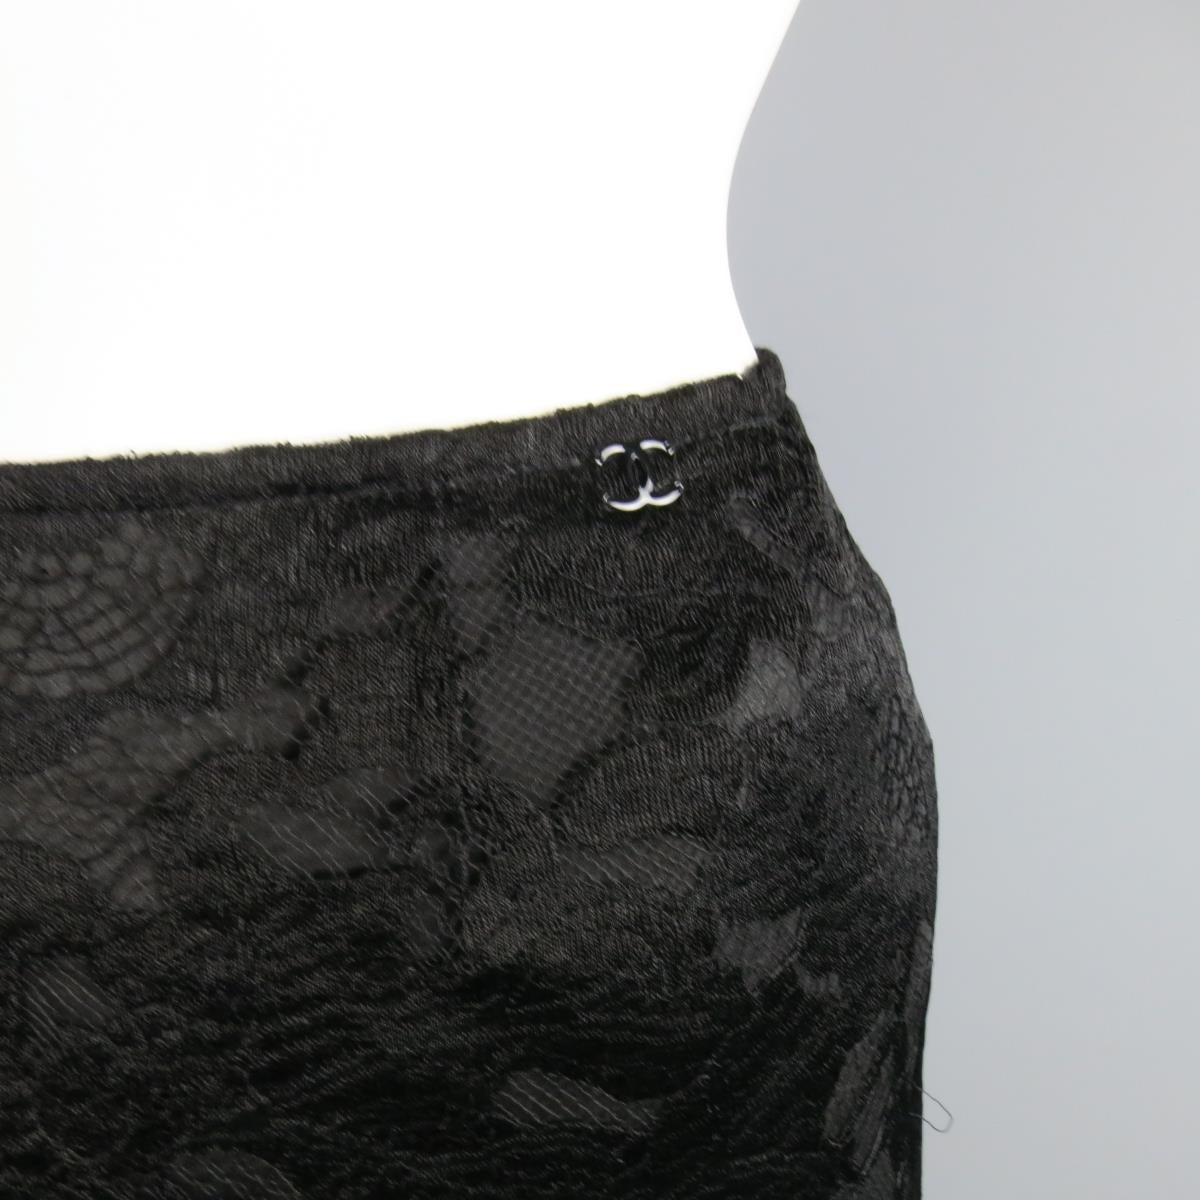 CHANEL Fall 2006 Size 8 Black Viscose / Silk  Lace Extreme Wide Leg Dress Pants